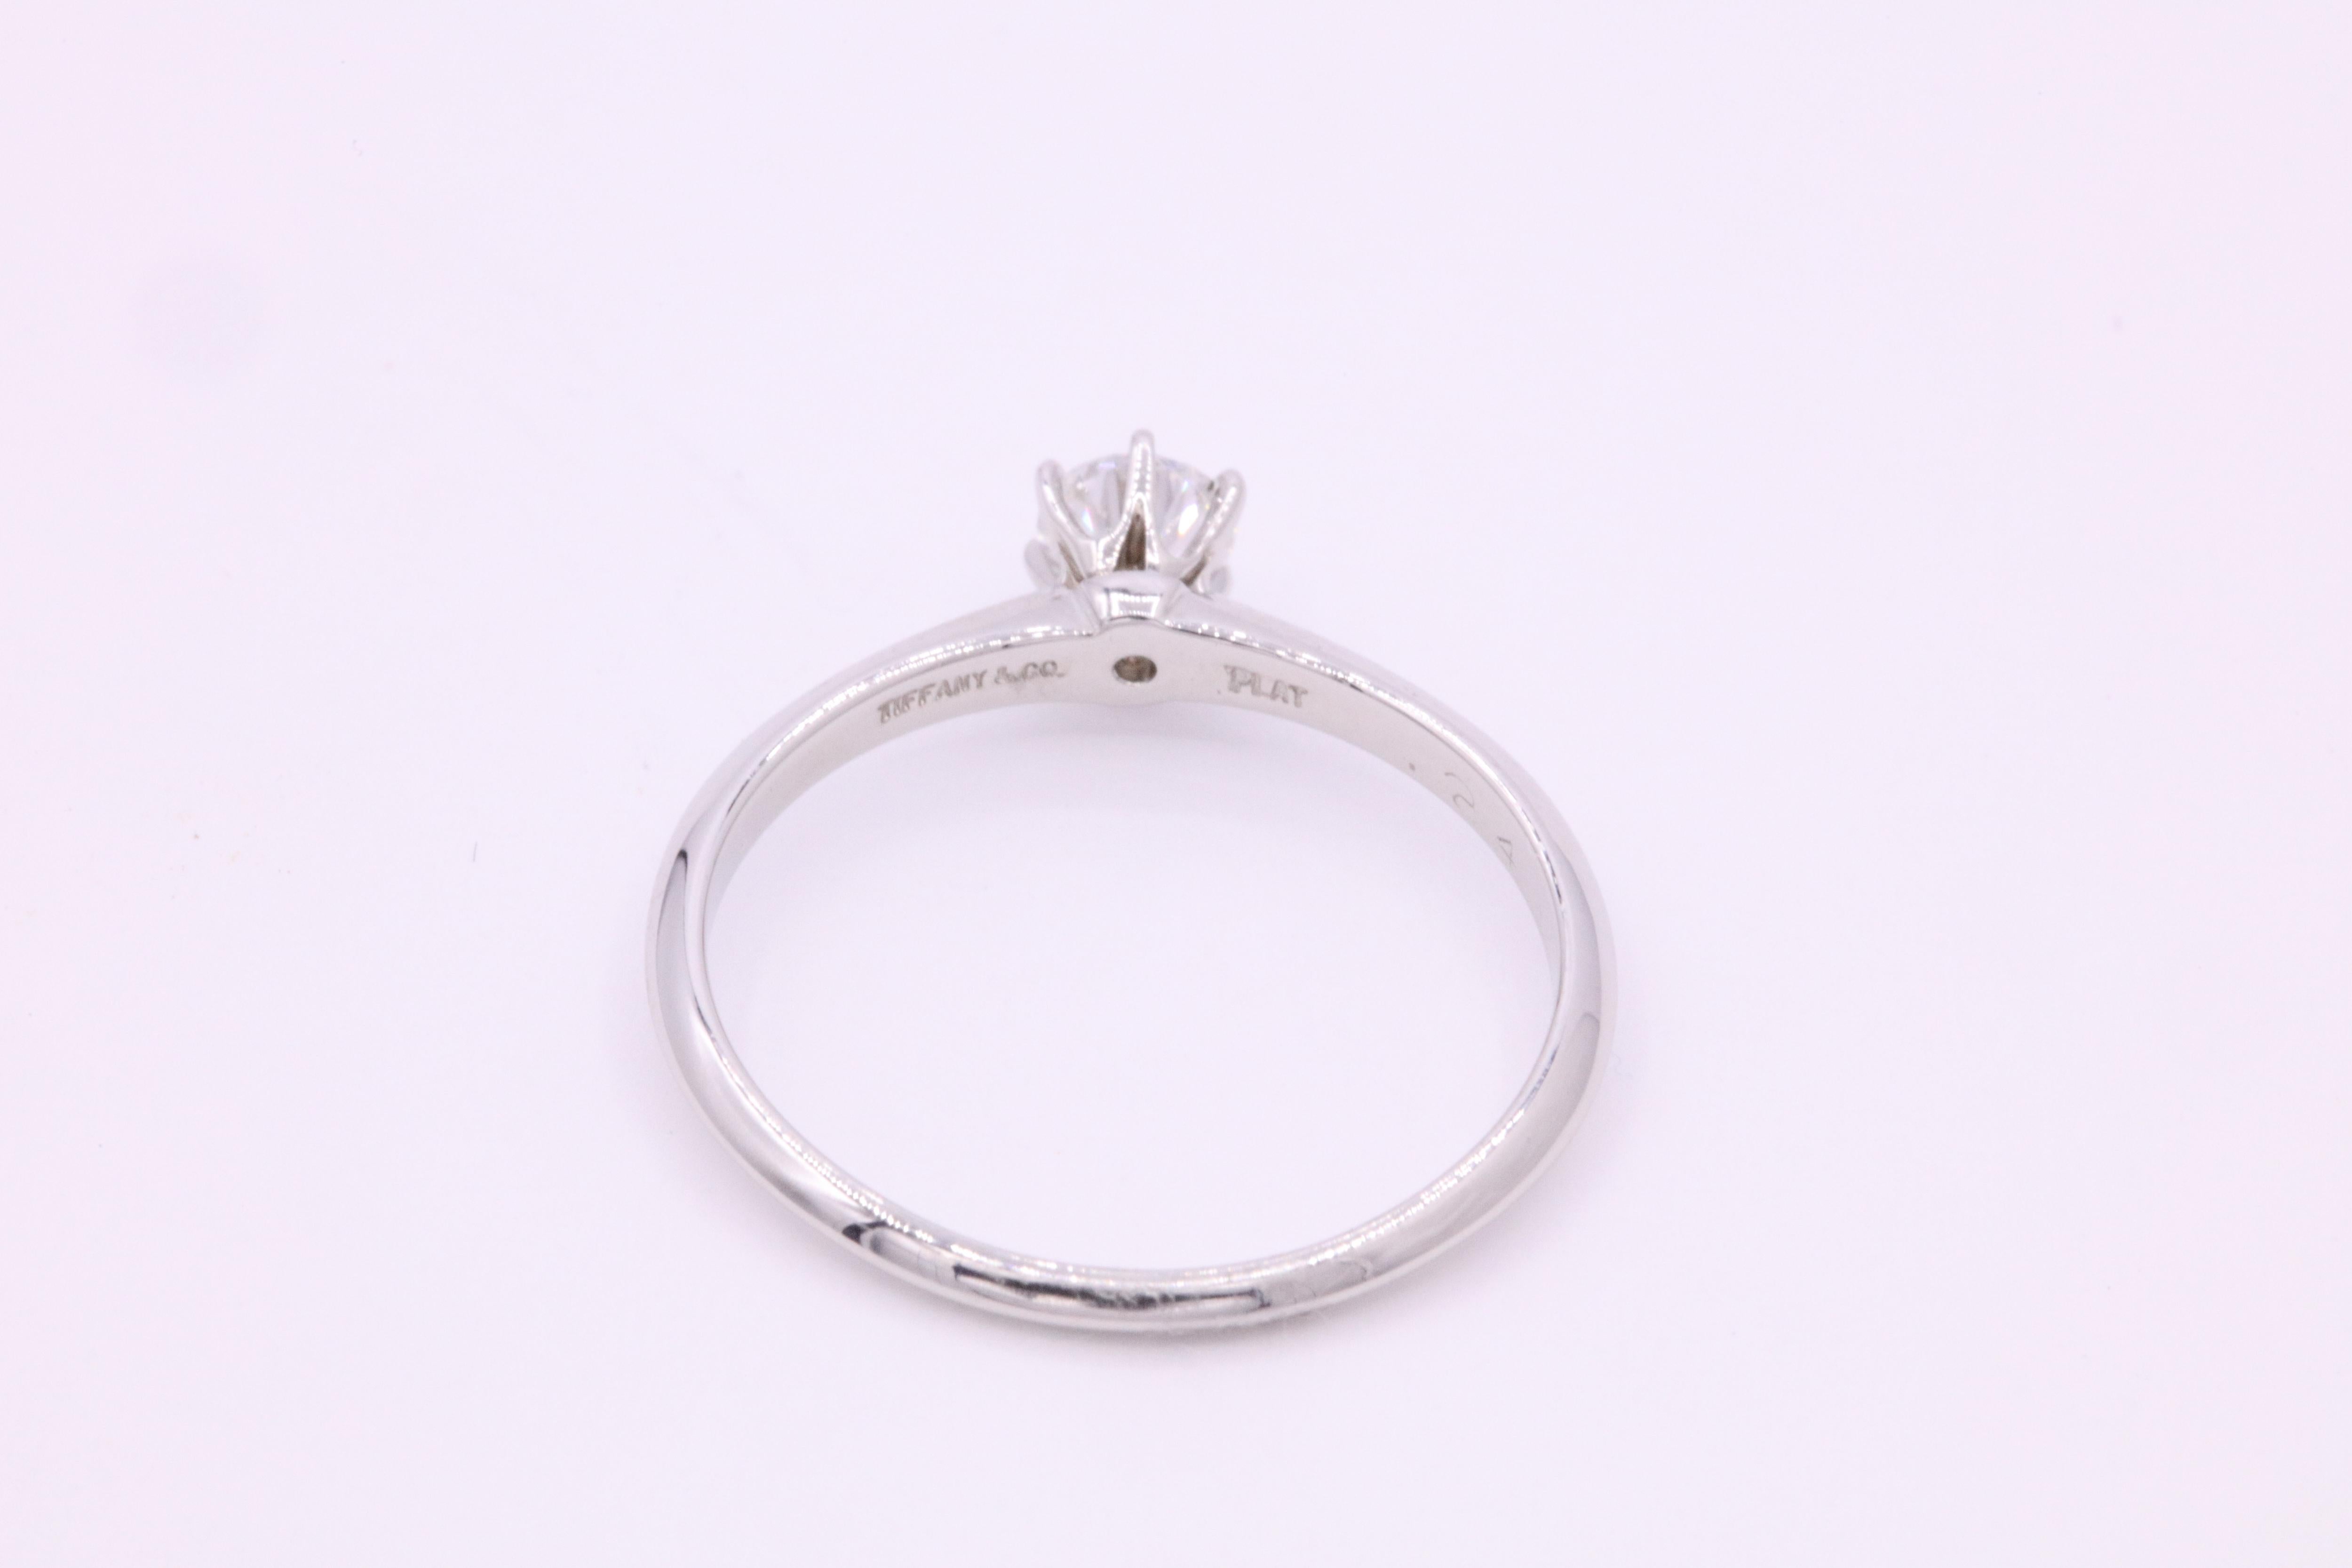 0.3 carat diamond ring